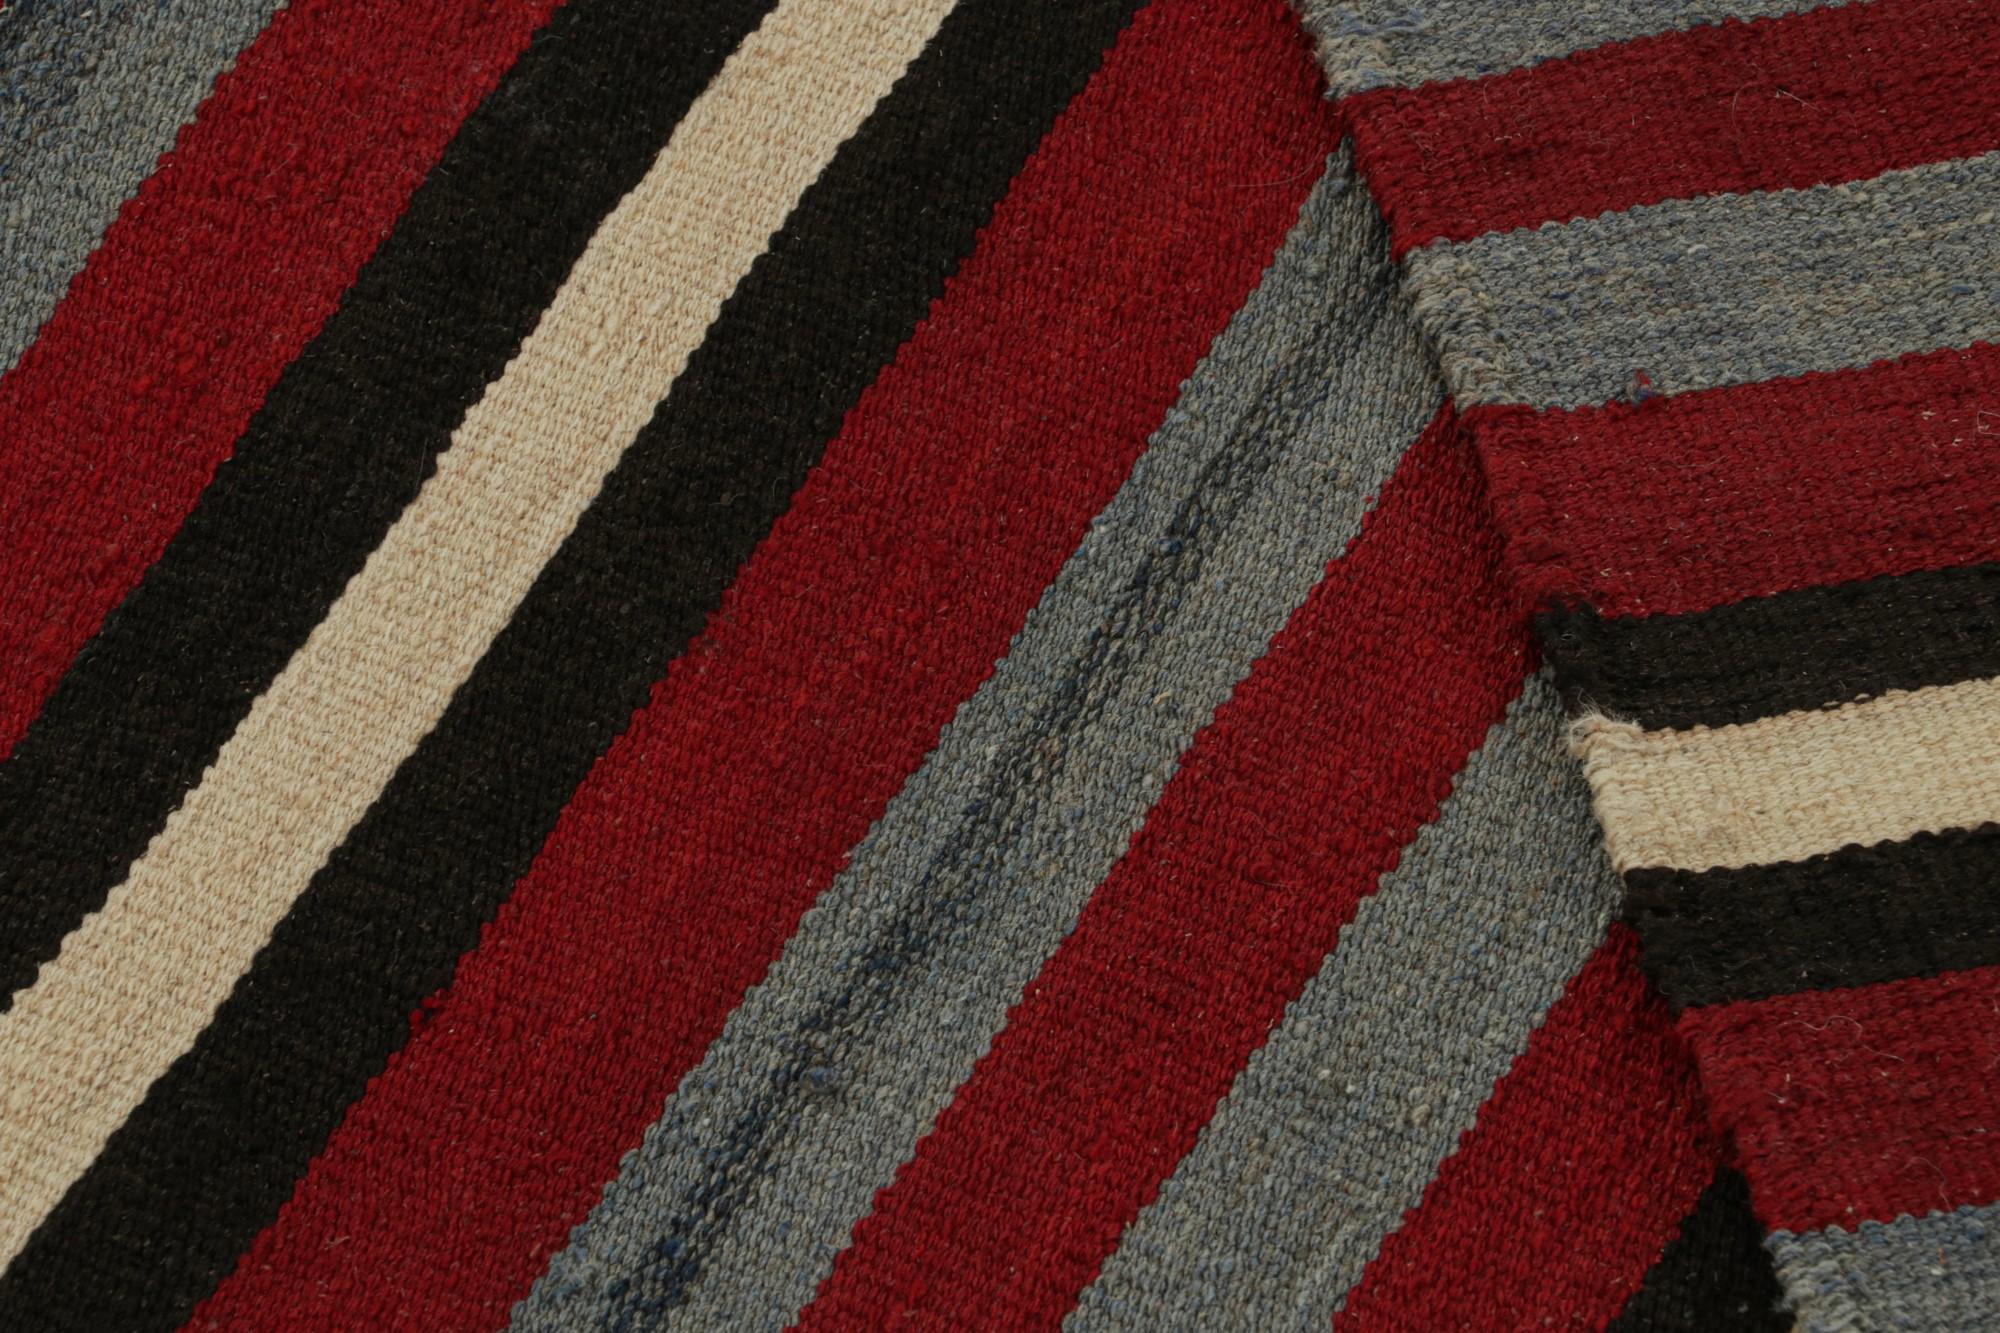 Wool Rug & Kilim’s Afghan Tribal Kilim Rug in Red with Geometric Striped Patterns For Sale